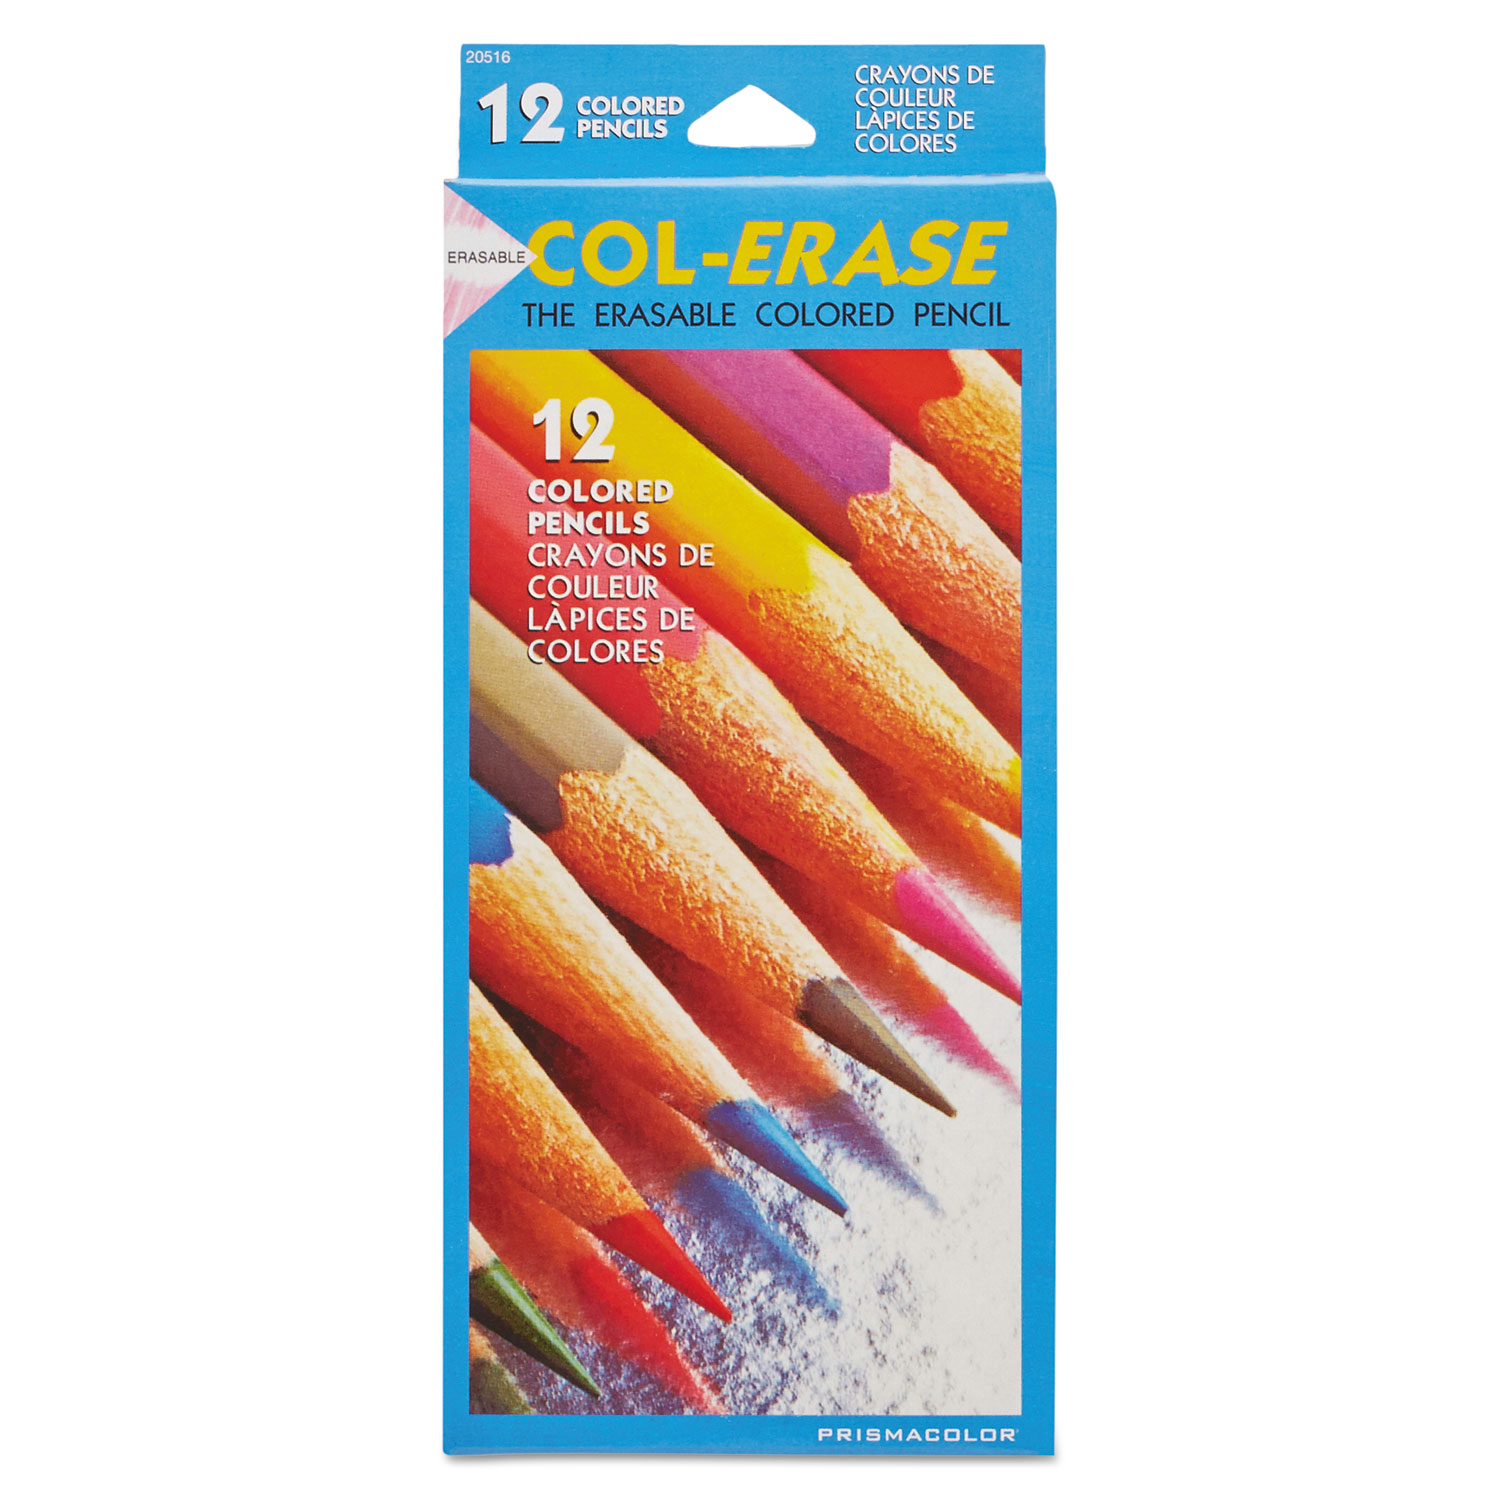 Prismacolor Col-Erase Colored Pencils Review